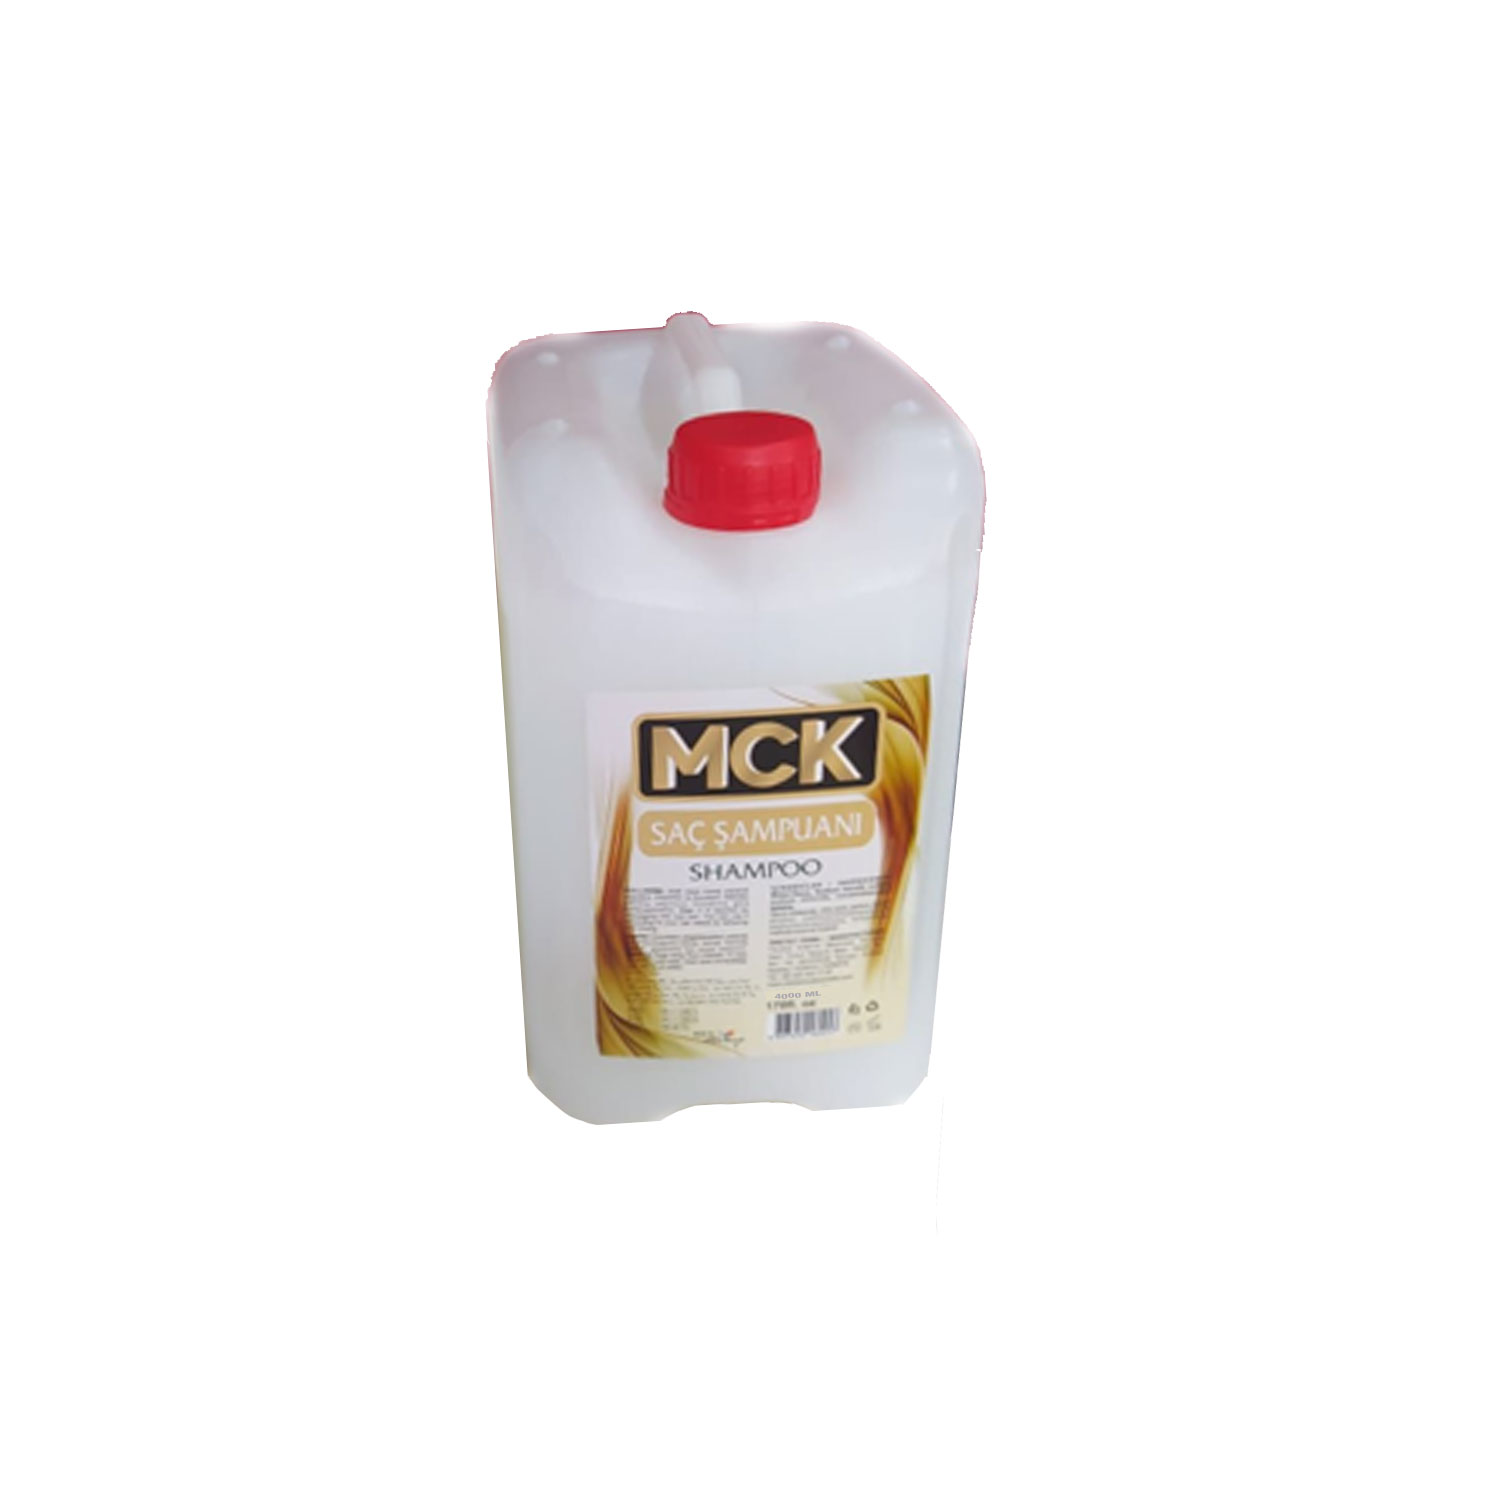 MCK Şampuan 4 Lt